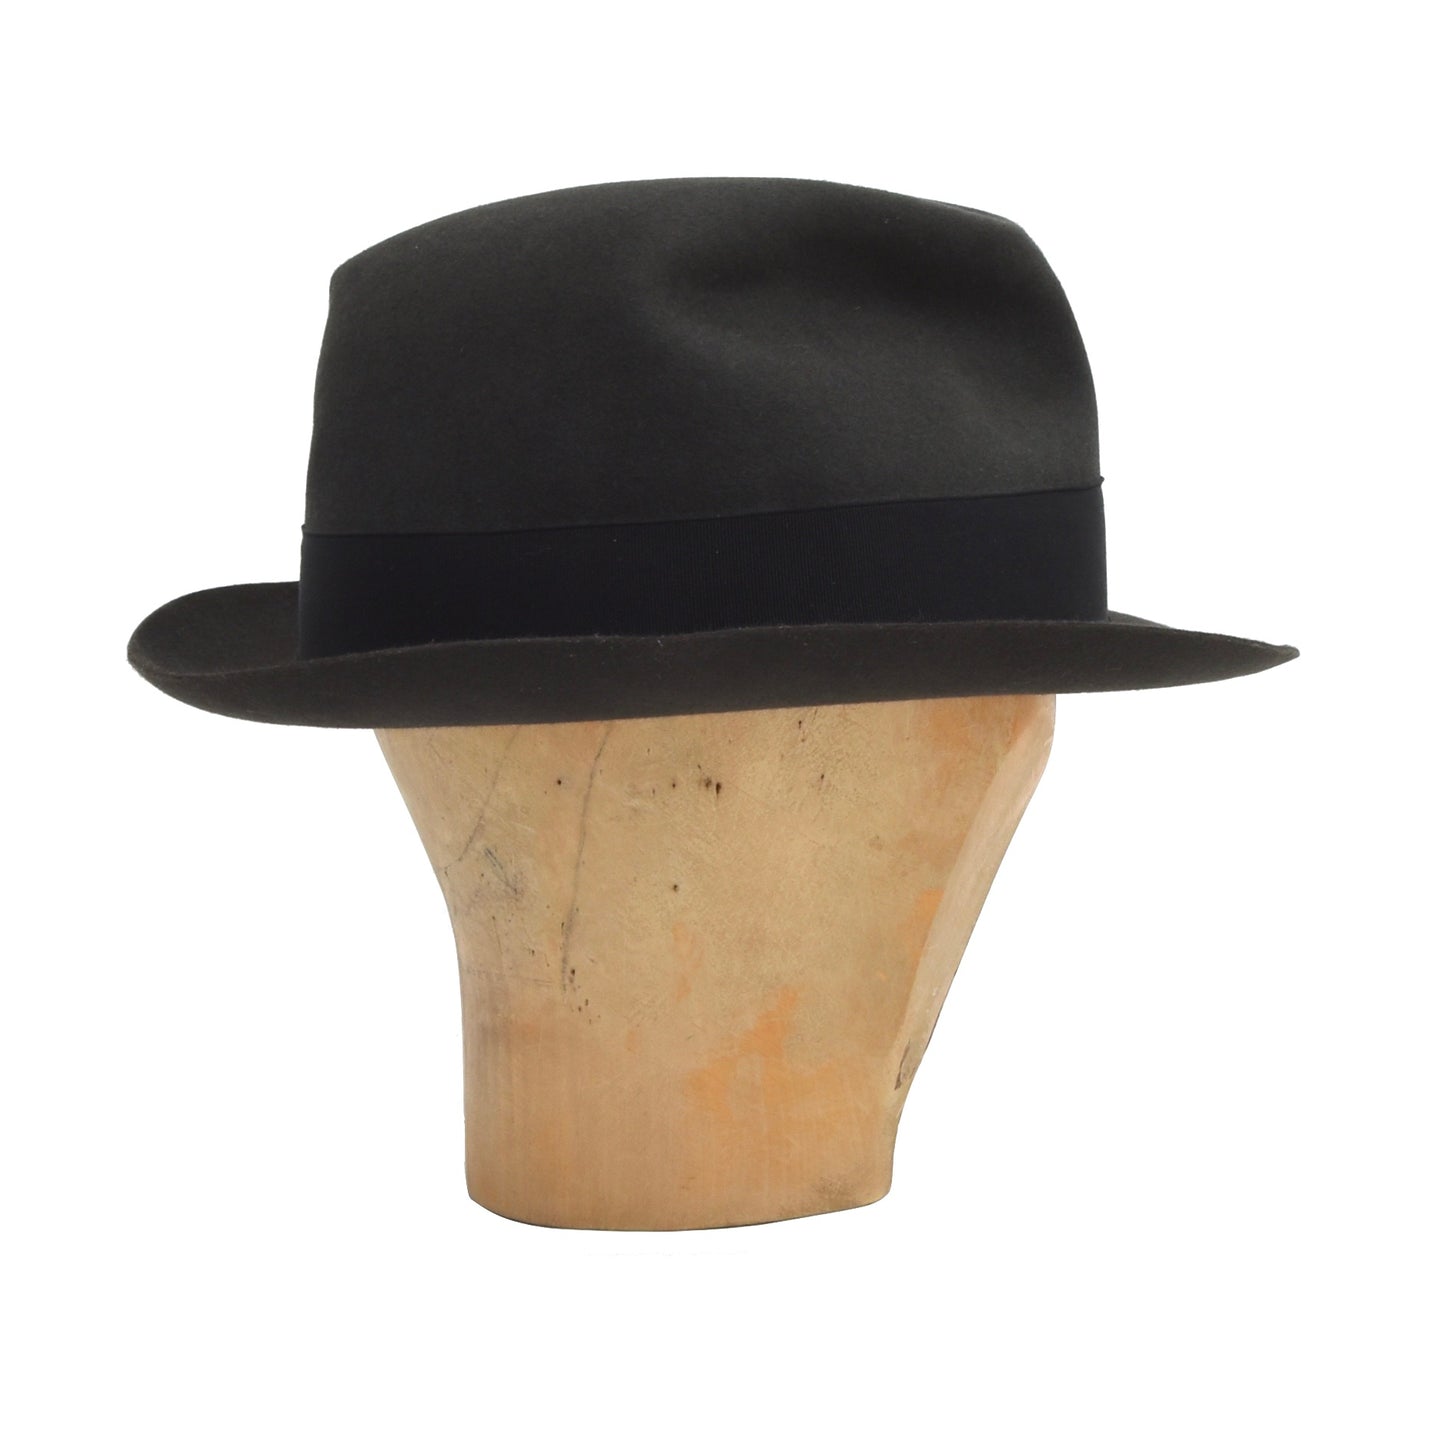 Vintage Borsalino Felt Hat 5.5cm Brim Size 60 - Uranid